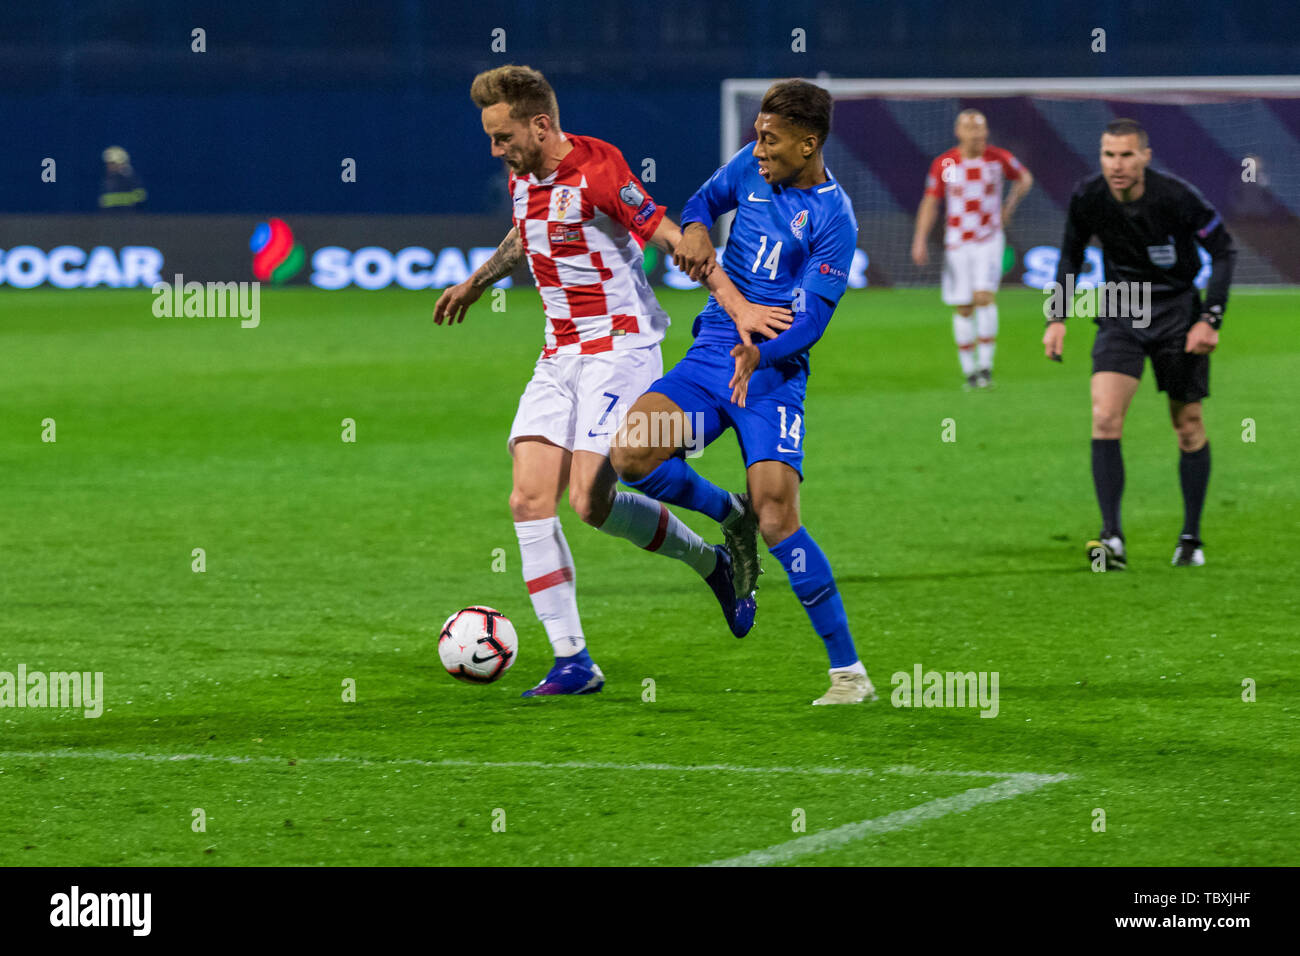 ZAGREB, CROATIA - MARCH 21, 2019: UEFA EURO 2020 Qualifying round. Croatia VS Azerbaijan. In action Ivan RAKITIC (7) and EDDY (14) Stock Photo